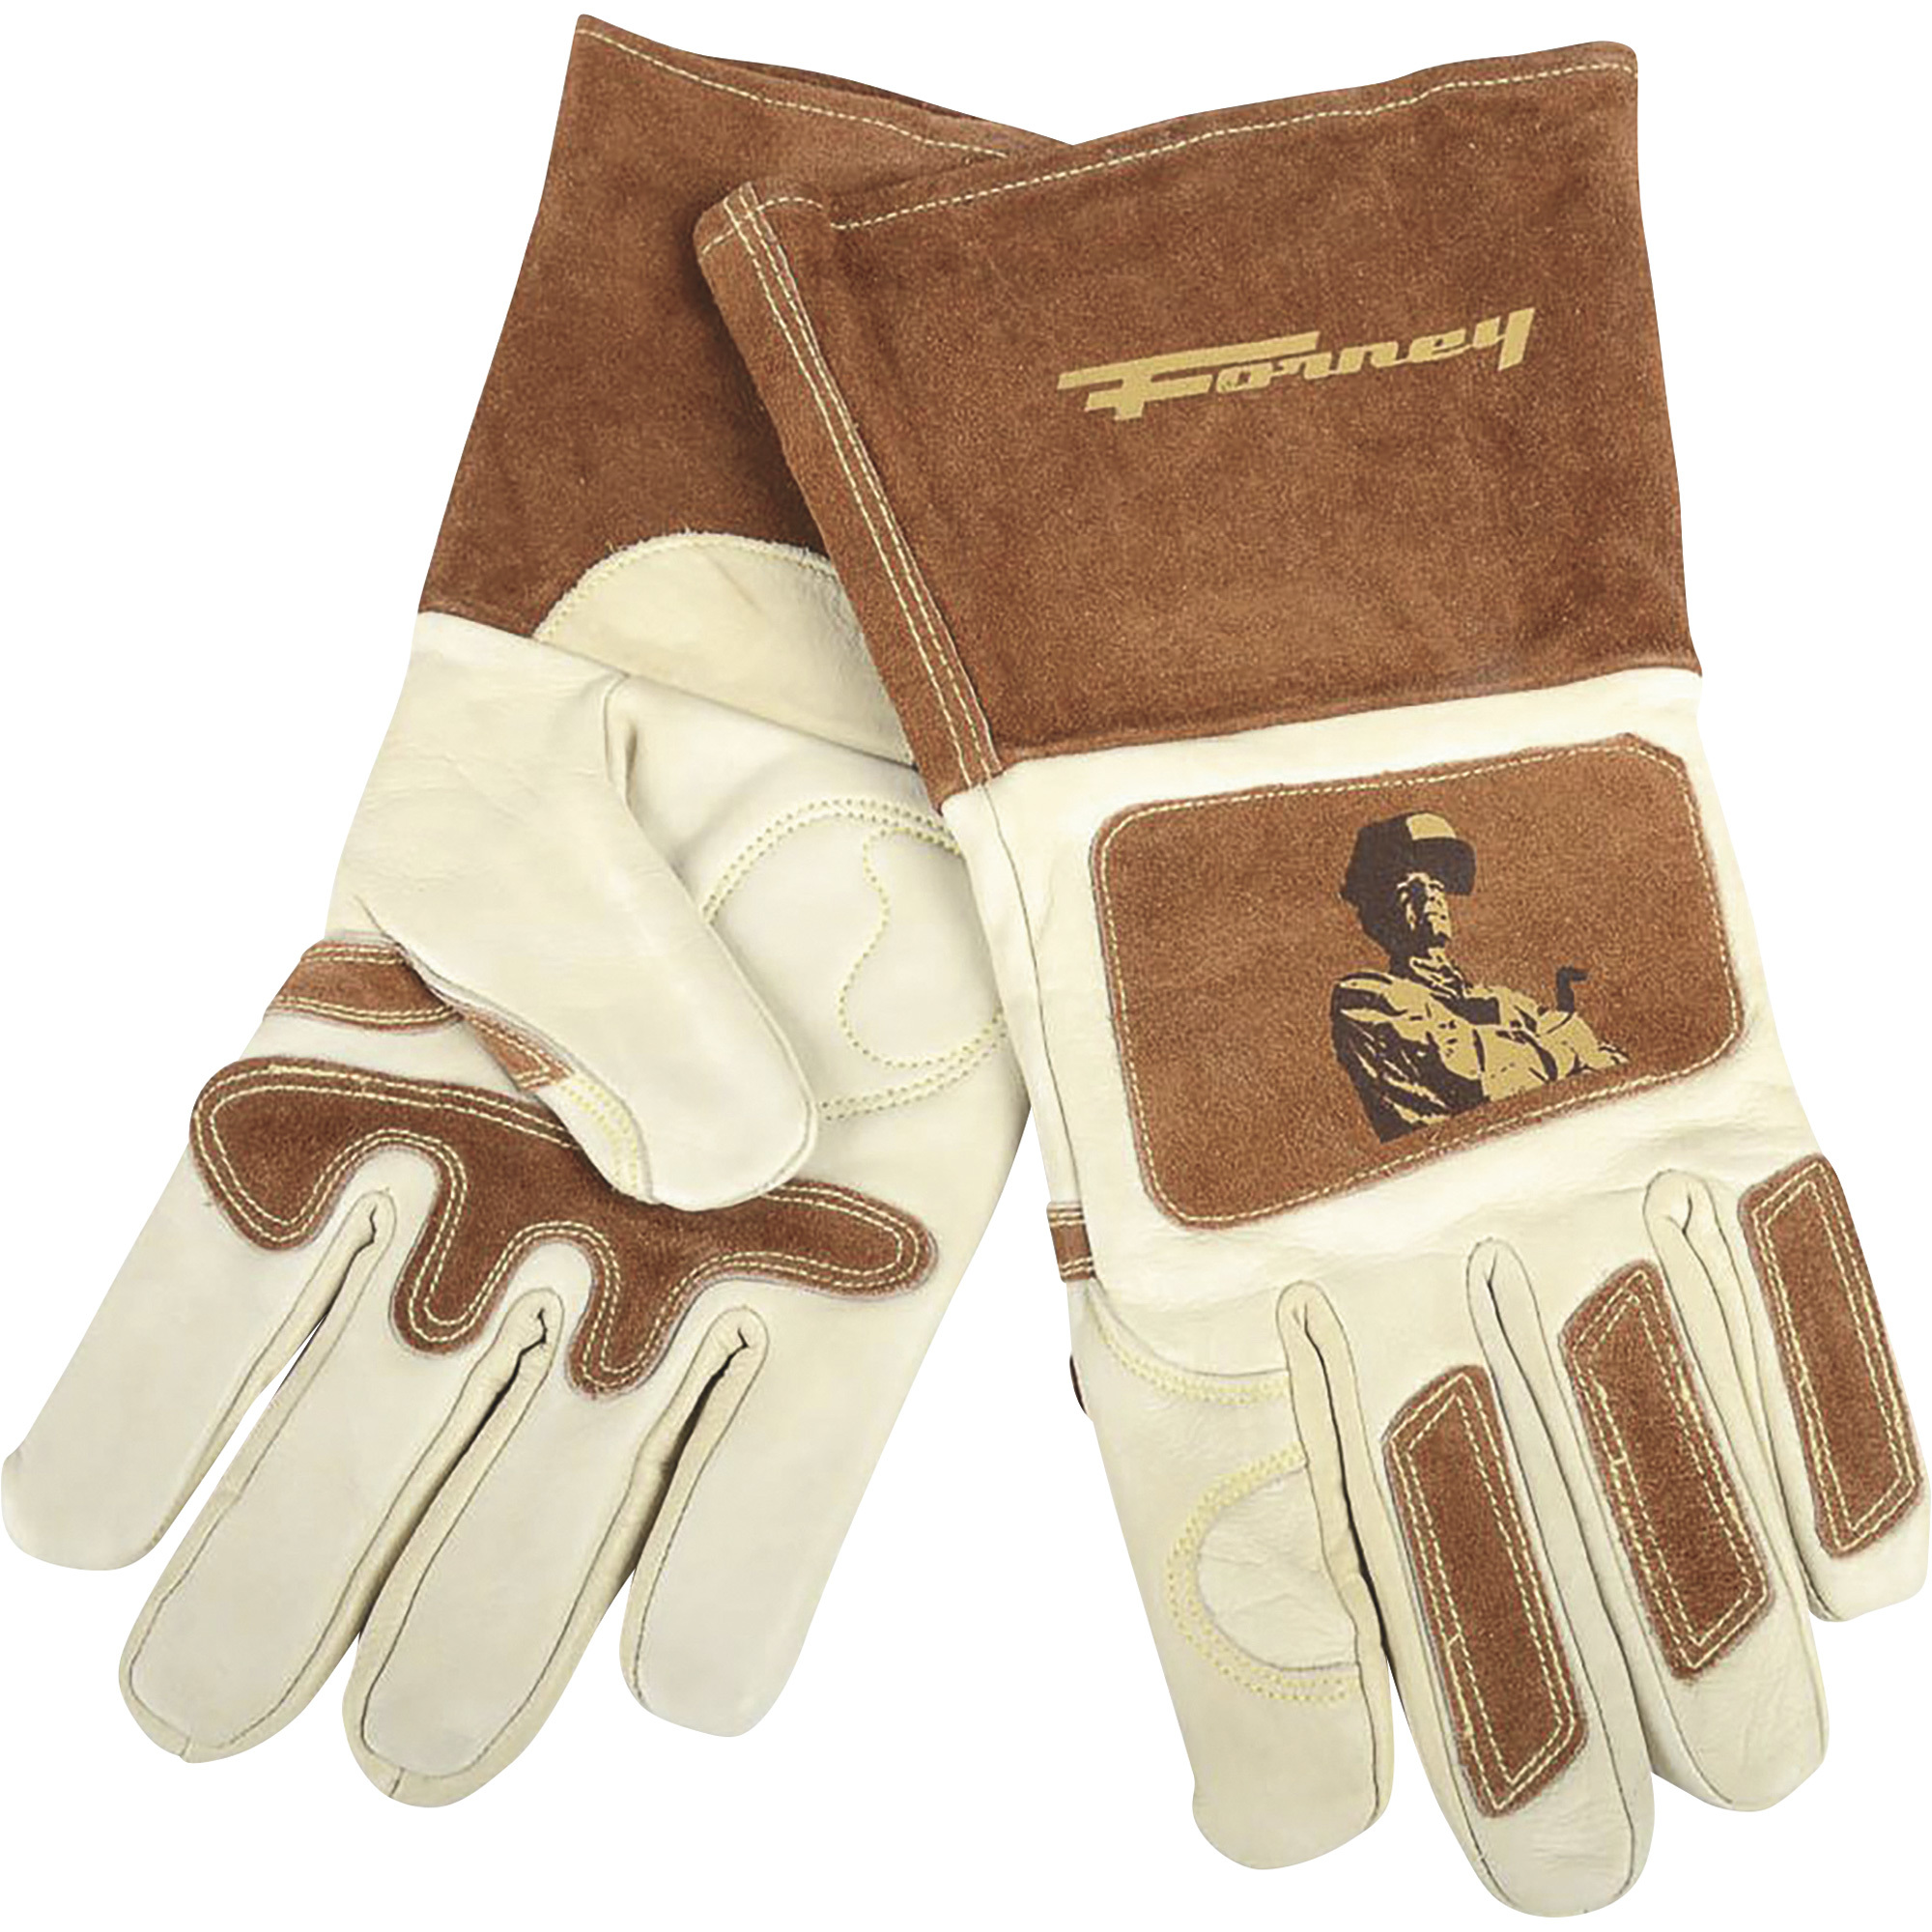 Forney Signature Multi-Purpose Welding Gloves â Large, Tan/Brown, Pair Model 53410